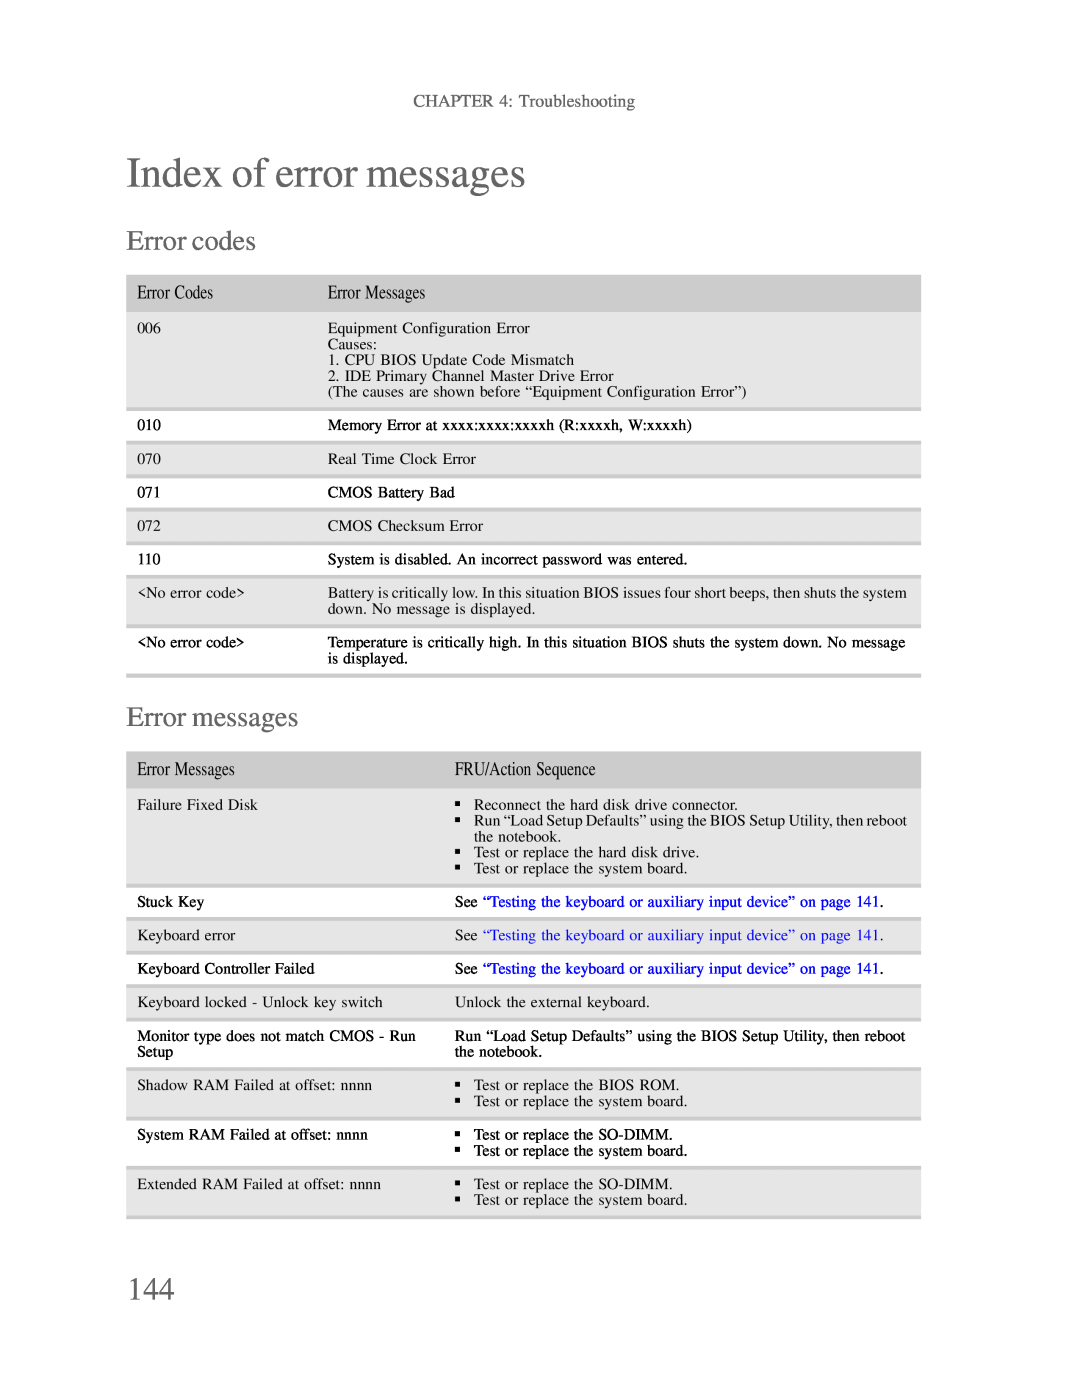 Gateway p-79 manual Index of error messages, Error codes, Error messages, Troubleshooting 